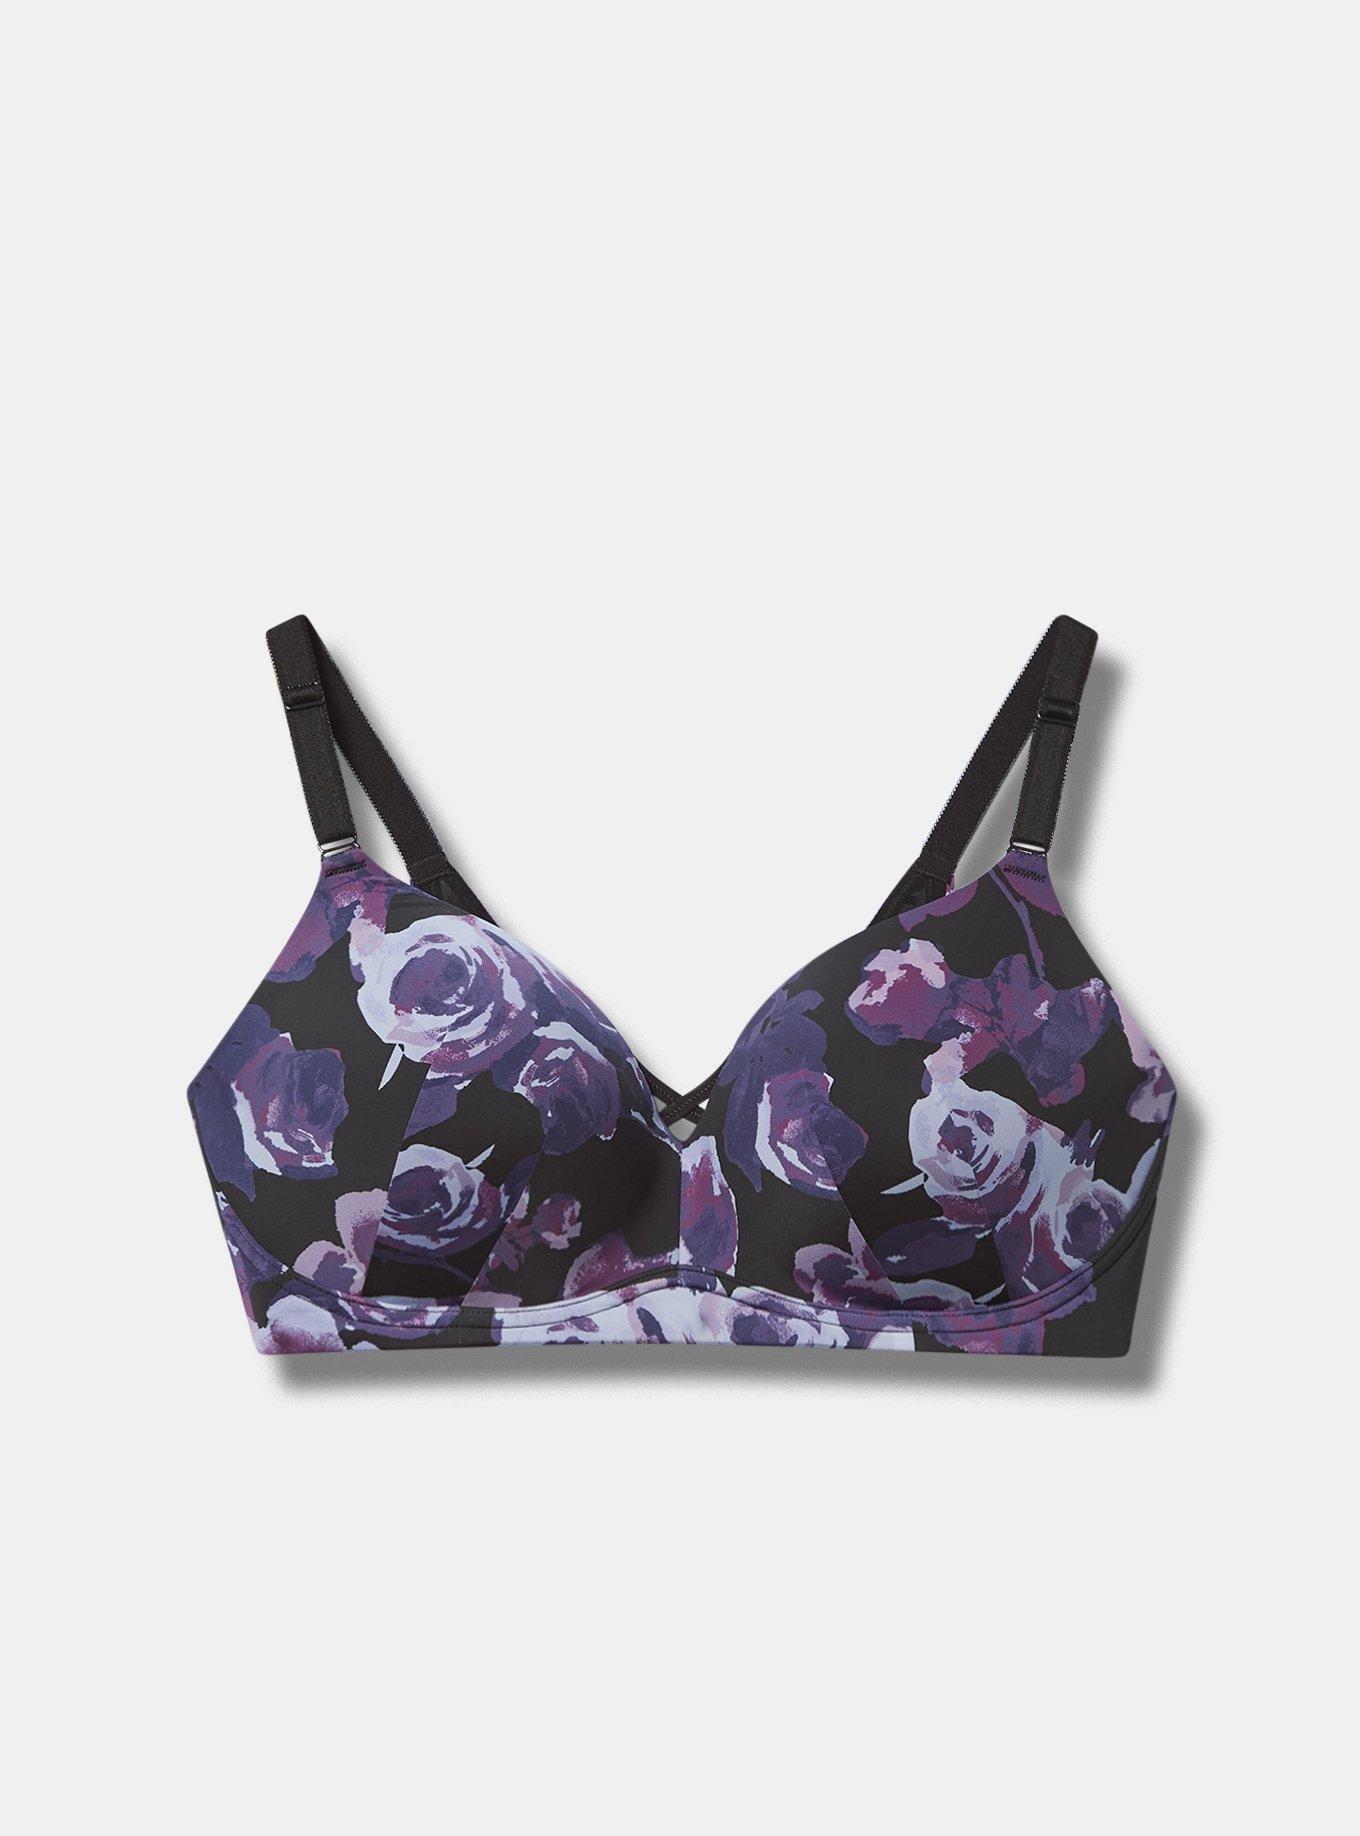 Auden Purple Push Up Wirefree Bra Size 36B - $15 - From Heather